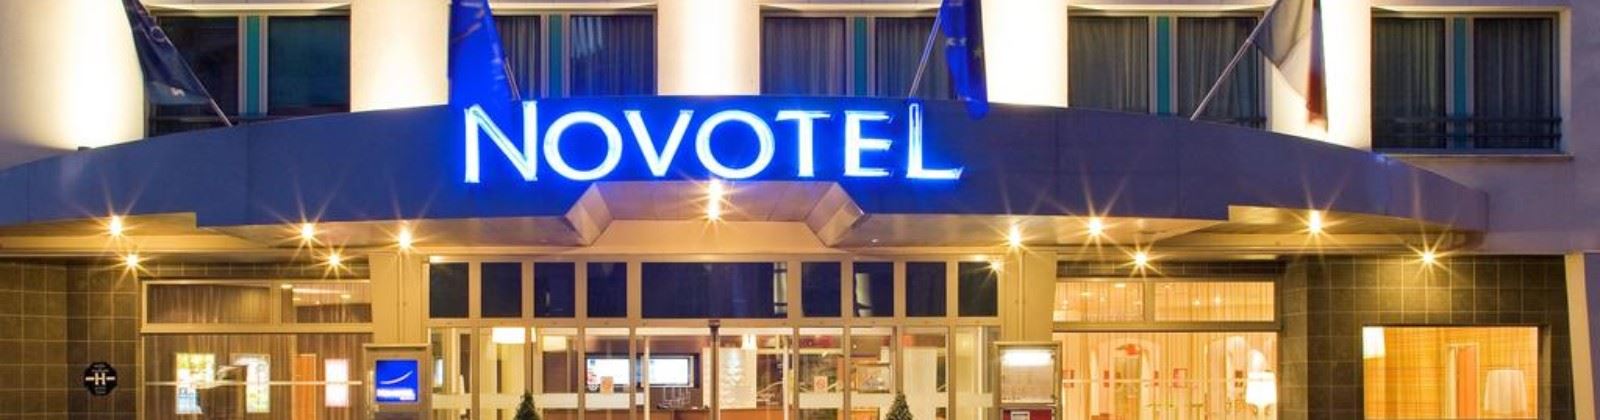 OLEVENE image - novotel-lille-centre-gare-olevene-hotel-restaurant-reunion-meeting-convention-seminaires-